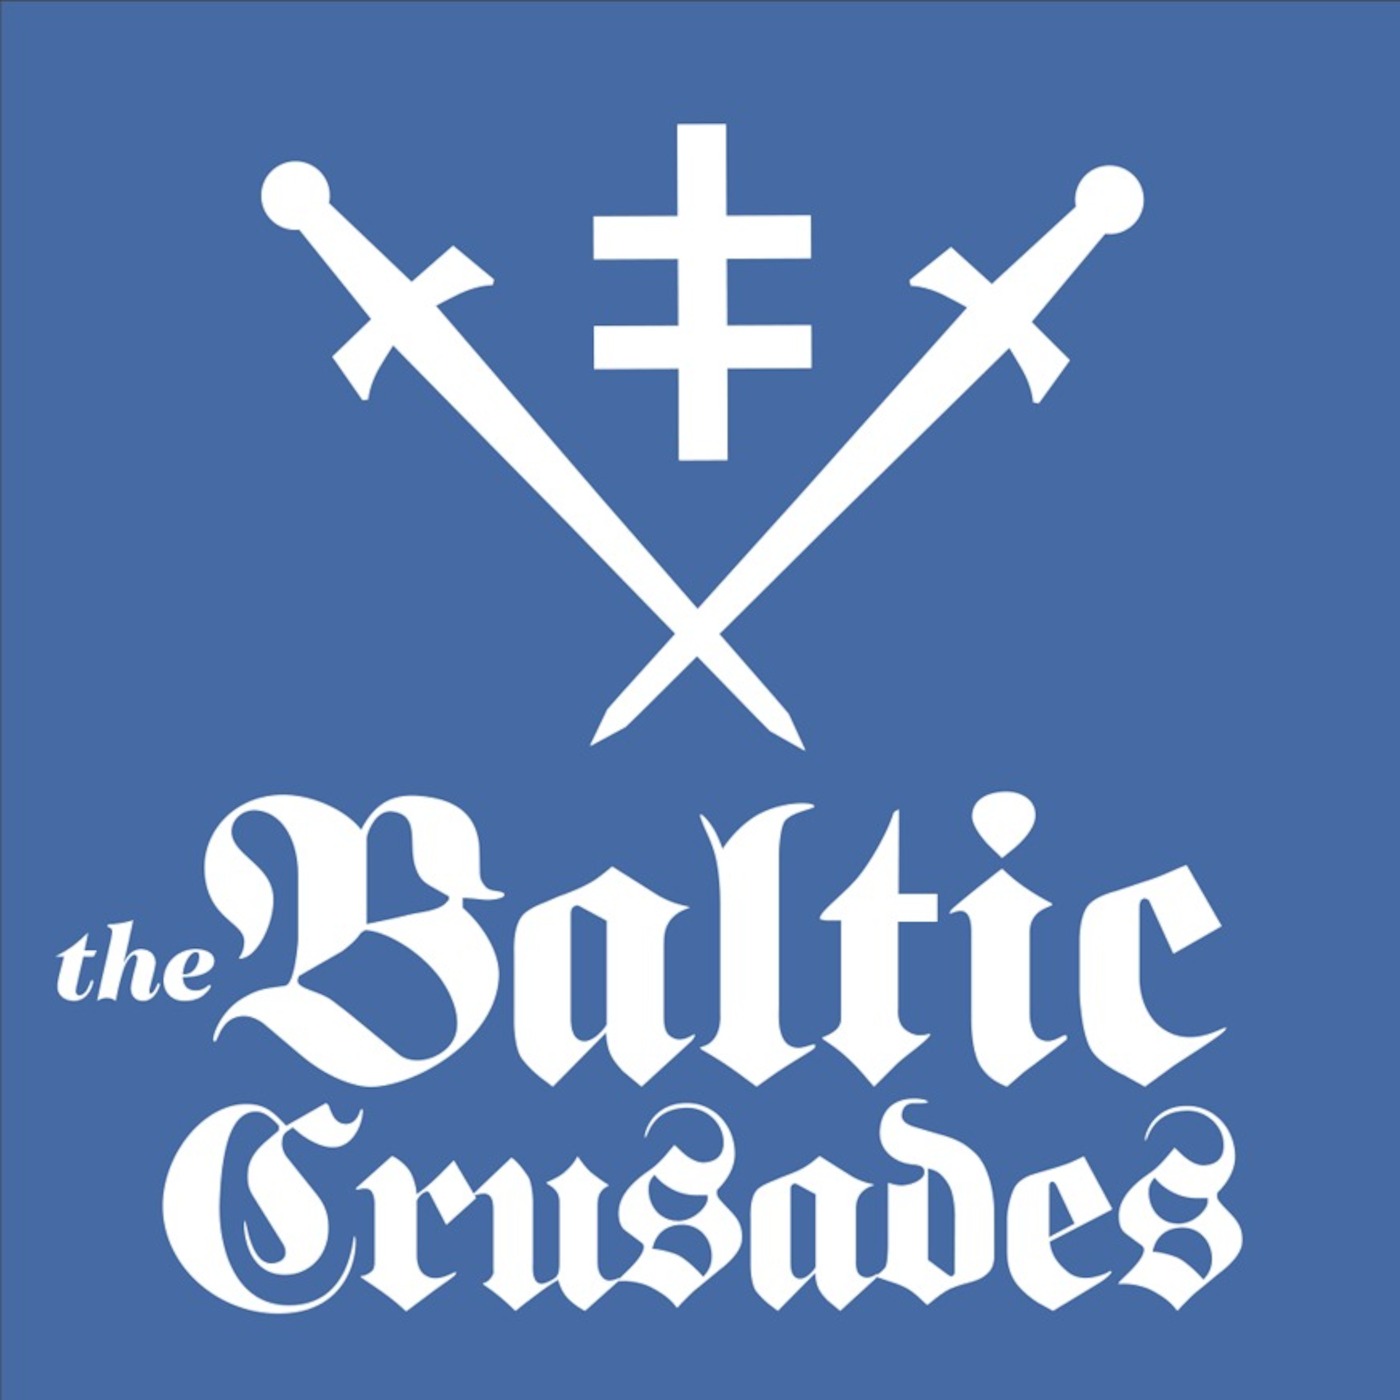 Episode 231 - The Baltic Crusades